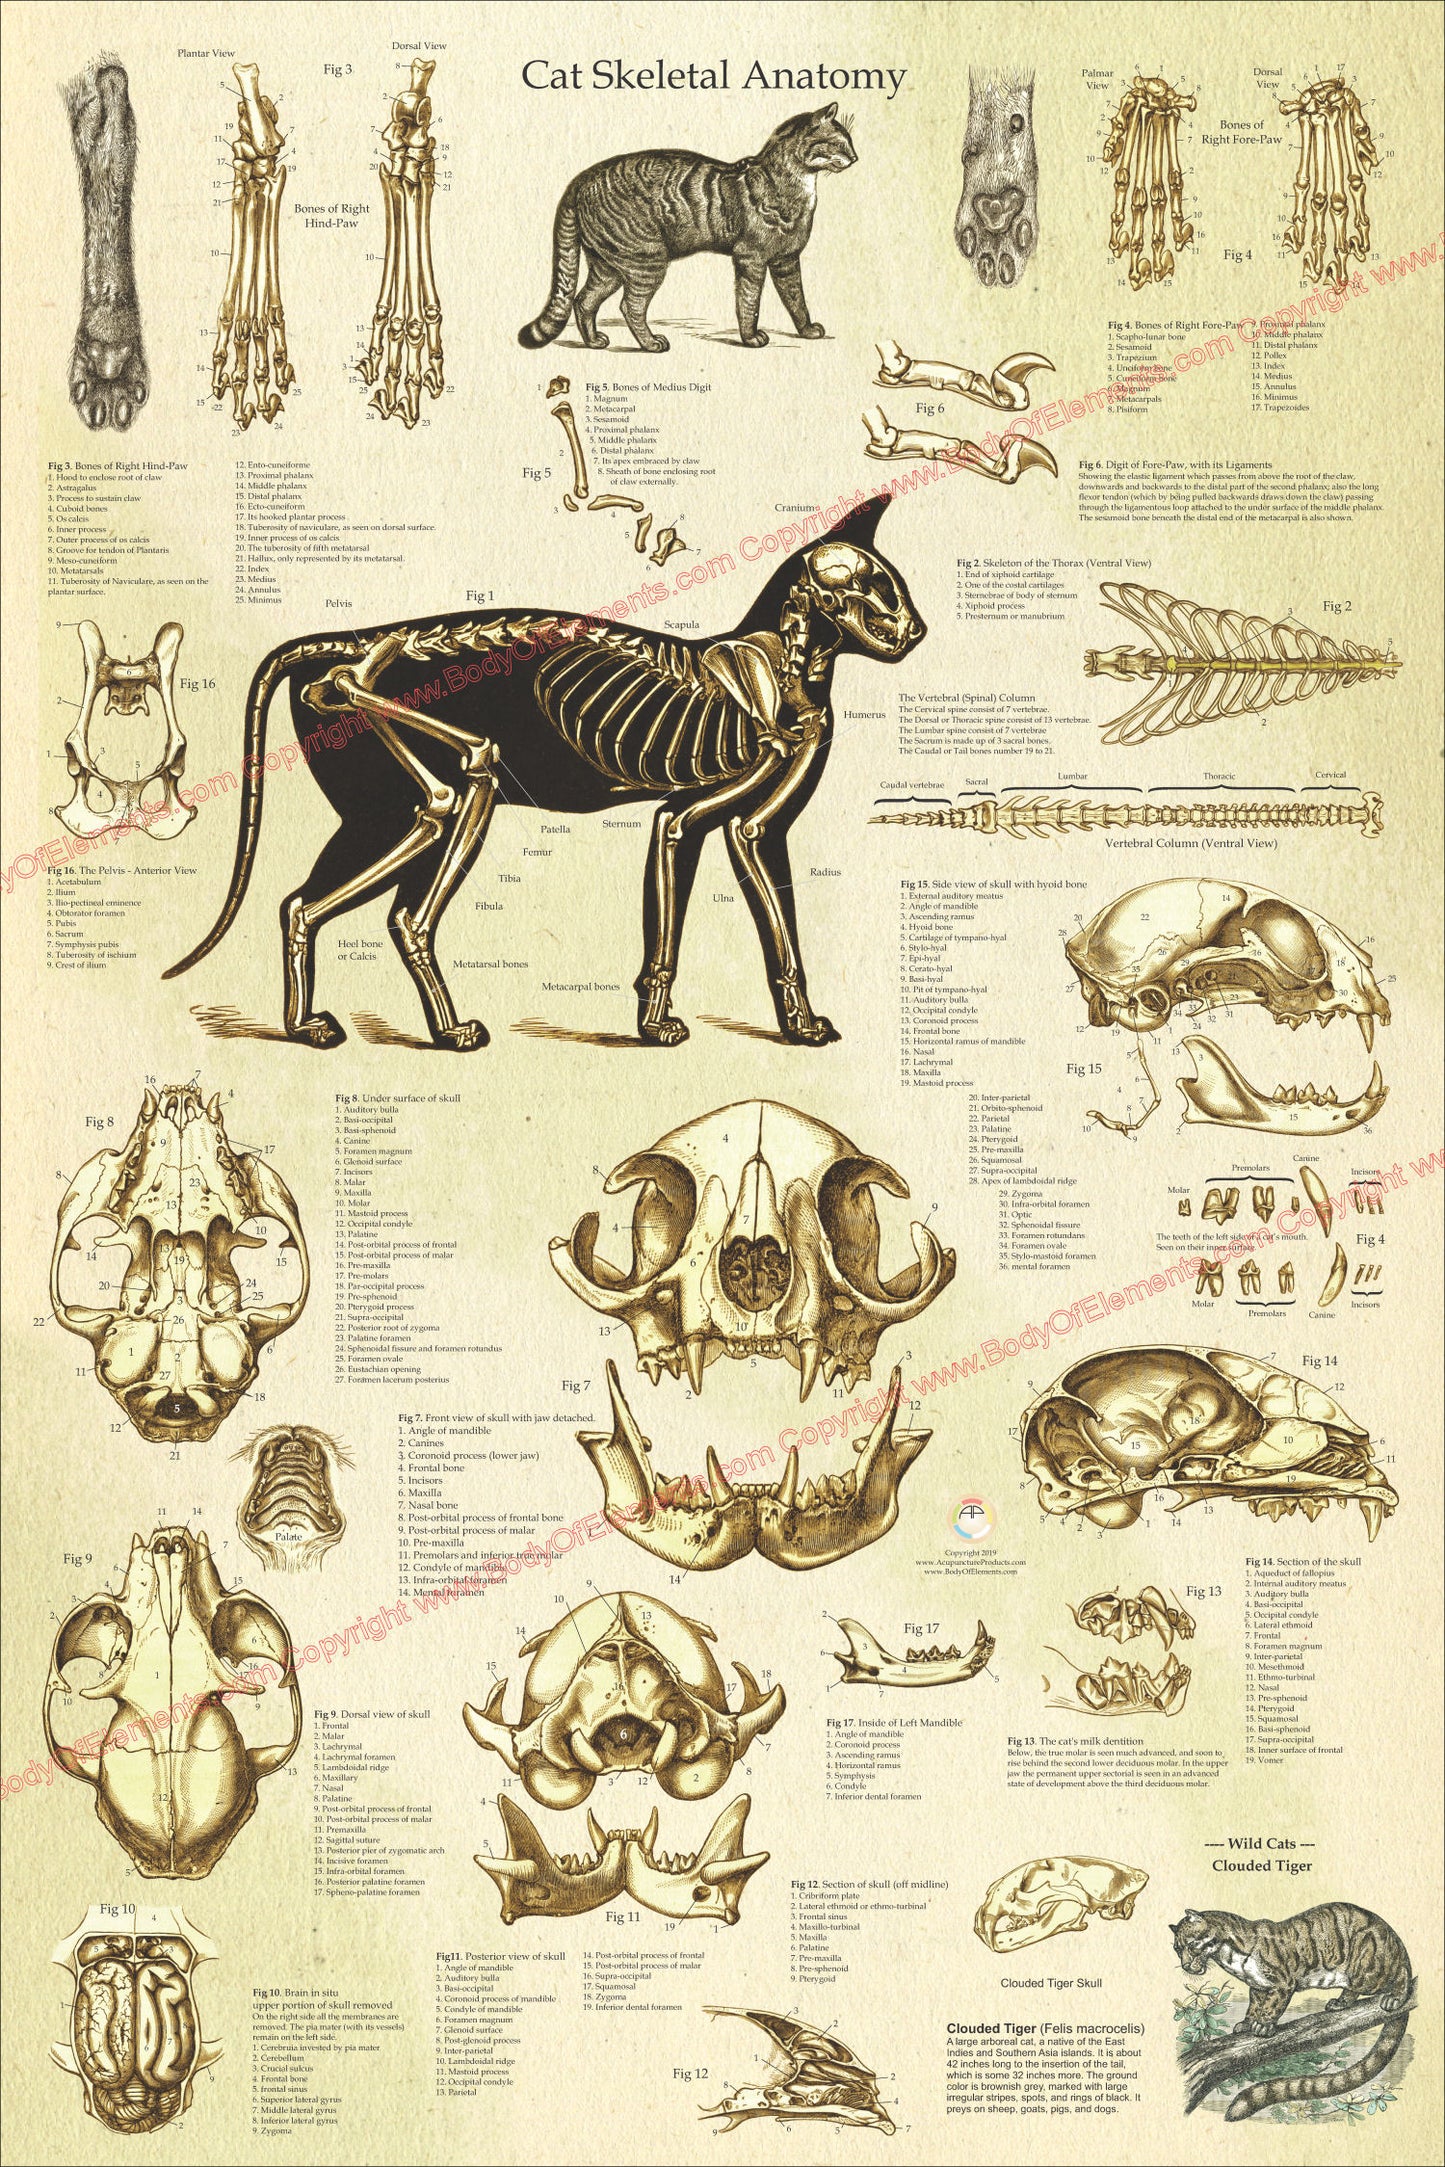 Cat skeletal skull anatomy poster